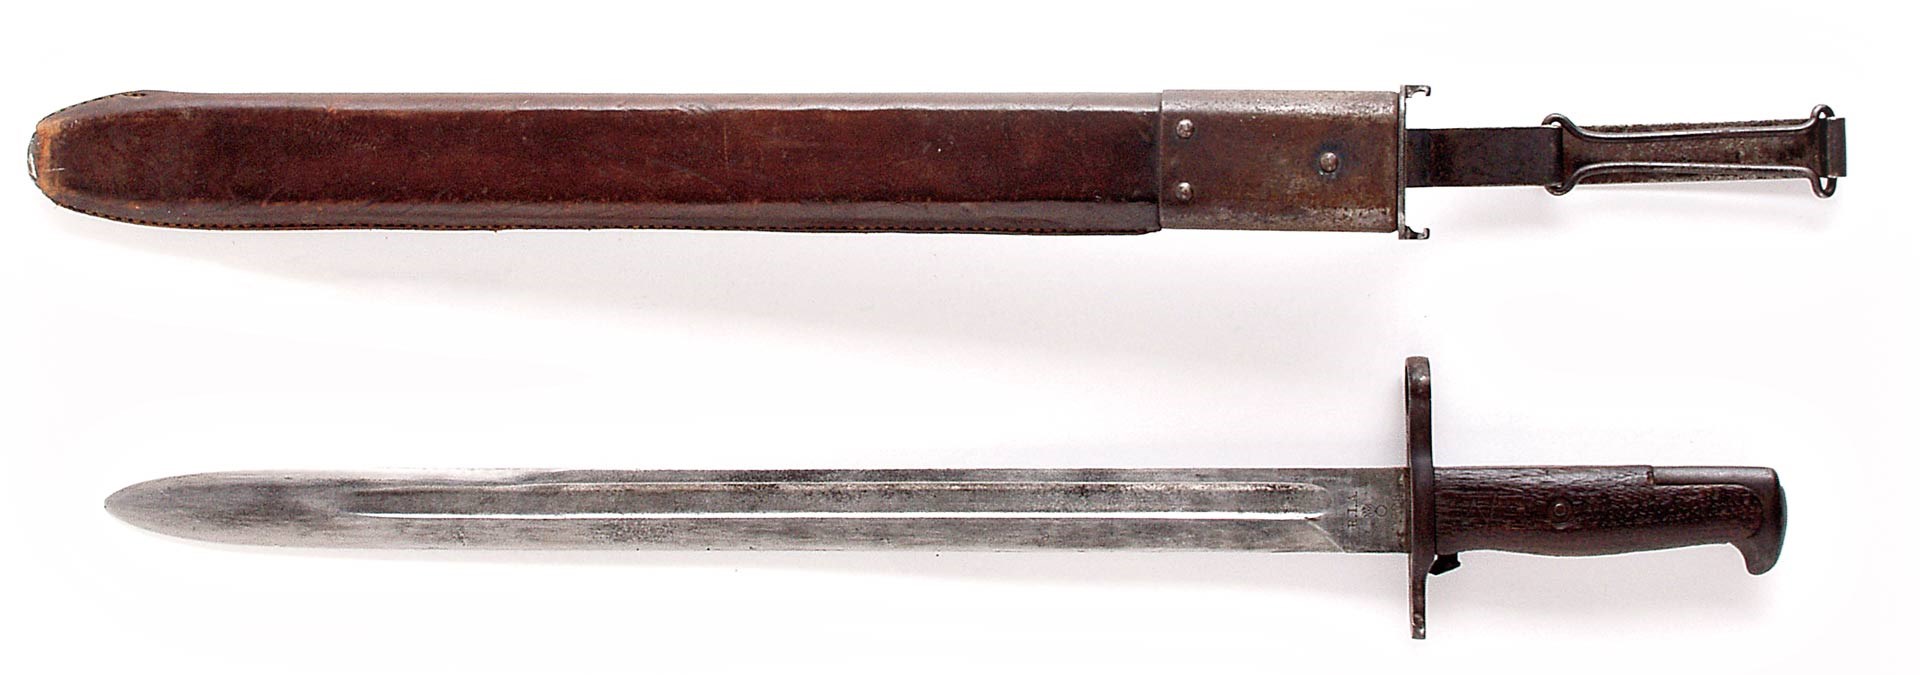 steel metal bayonet and scabbard